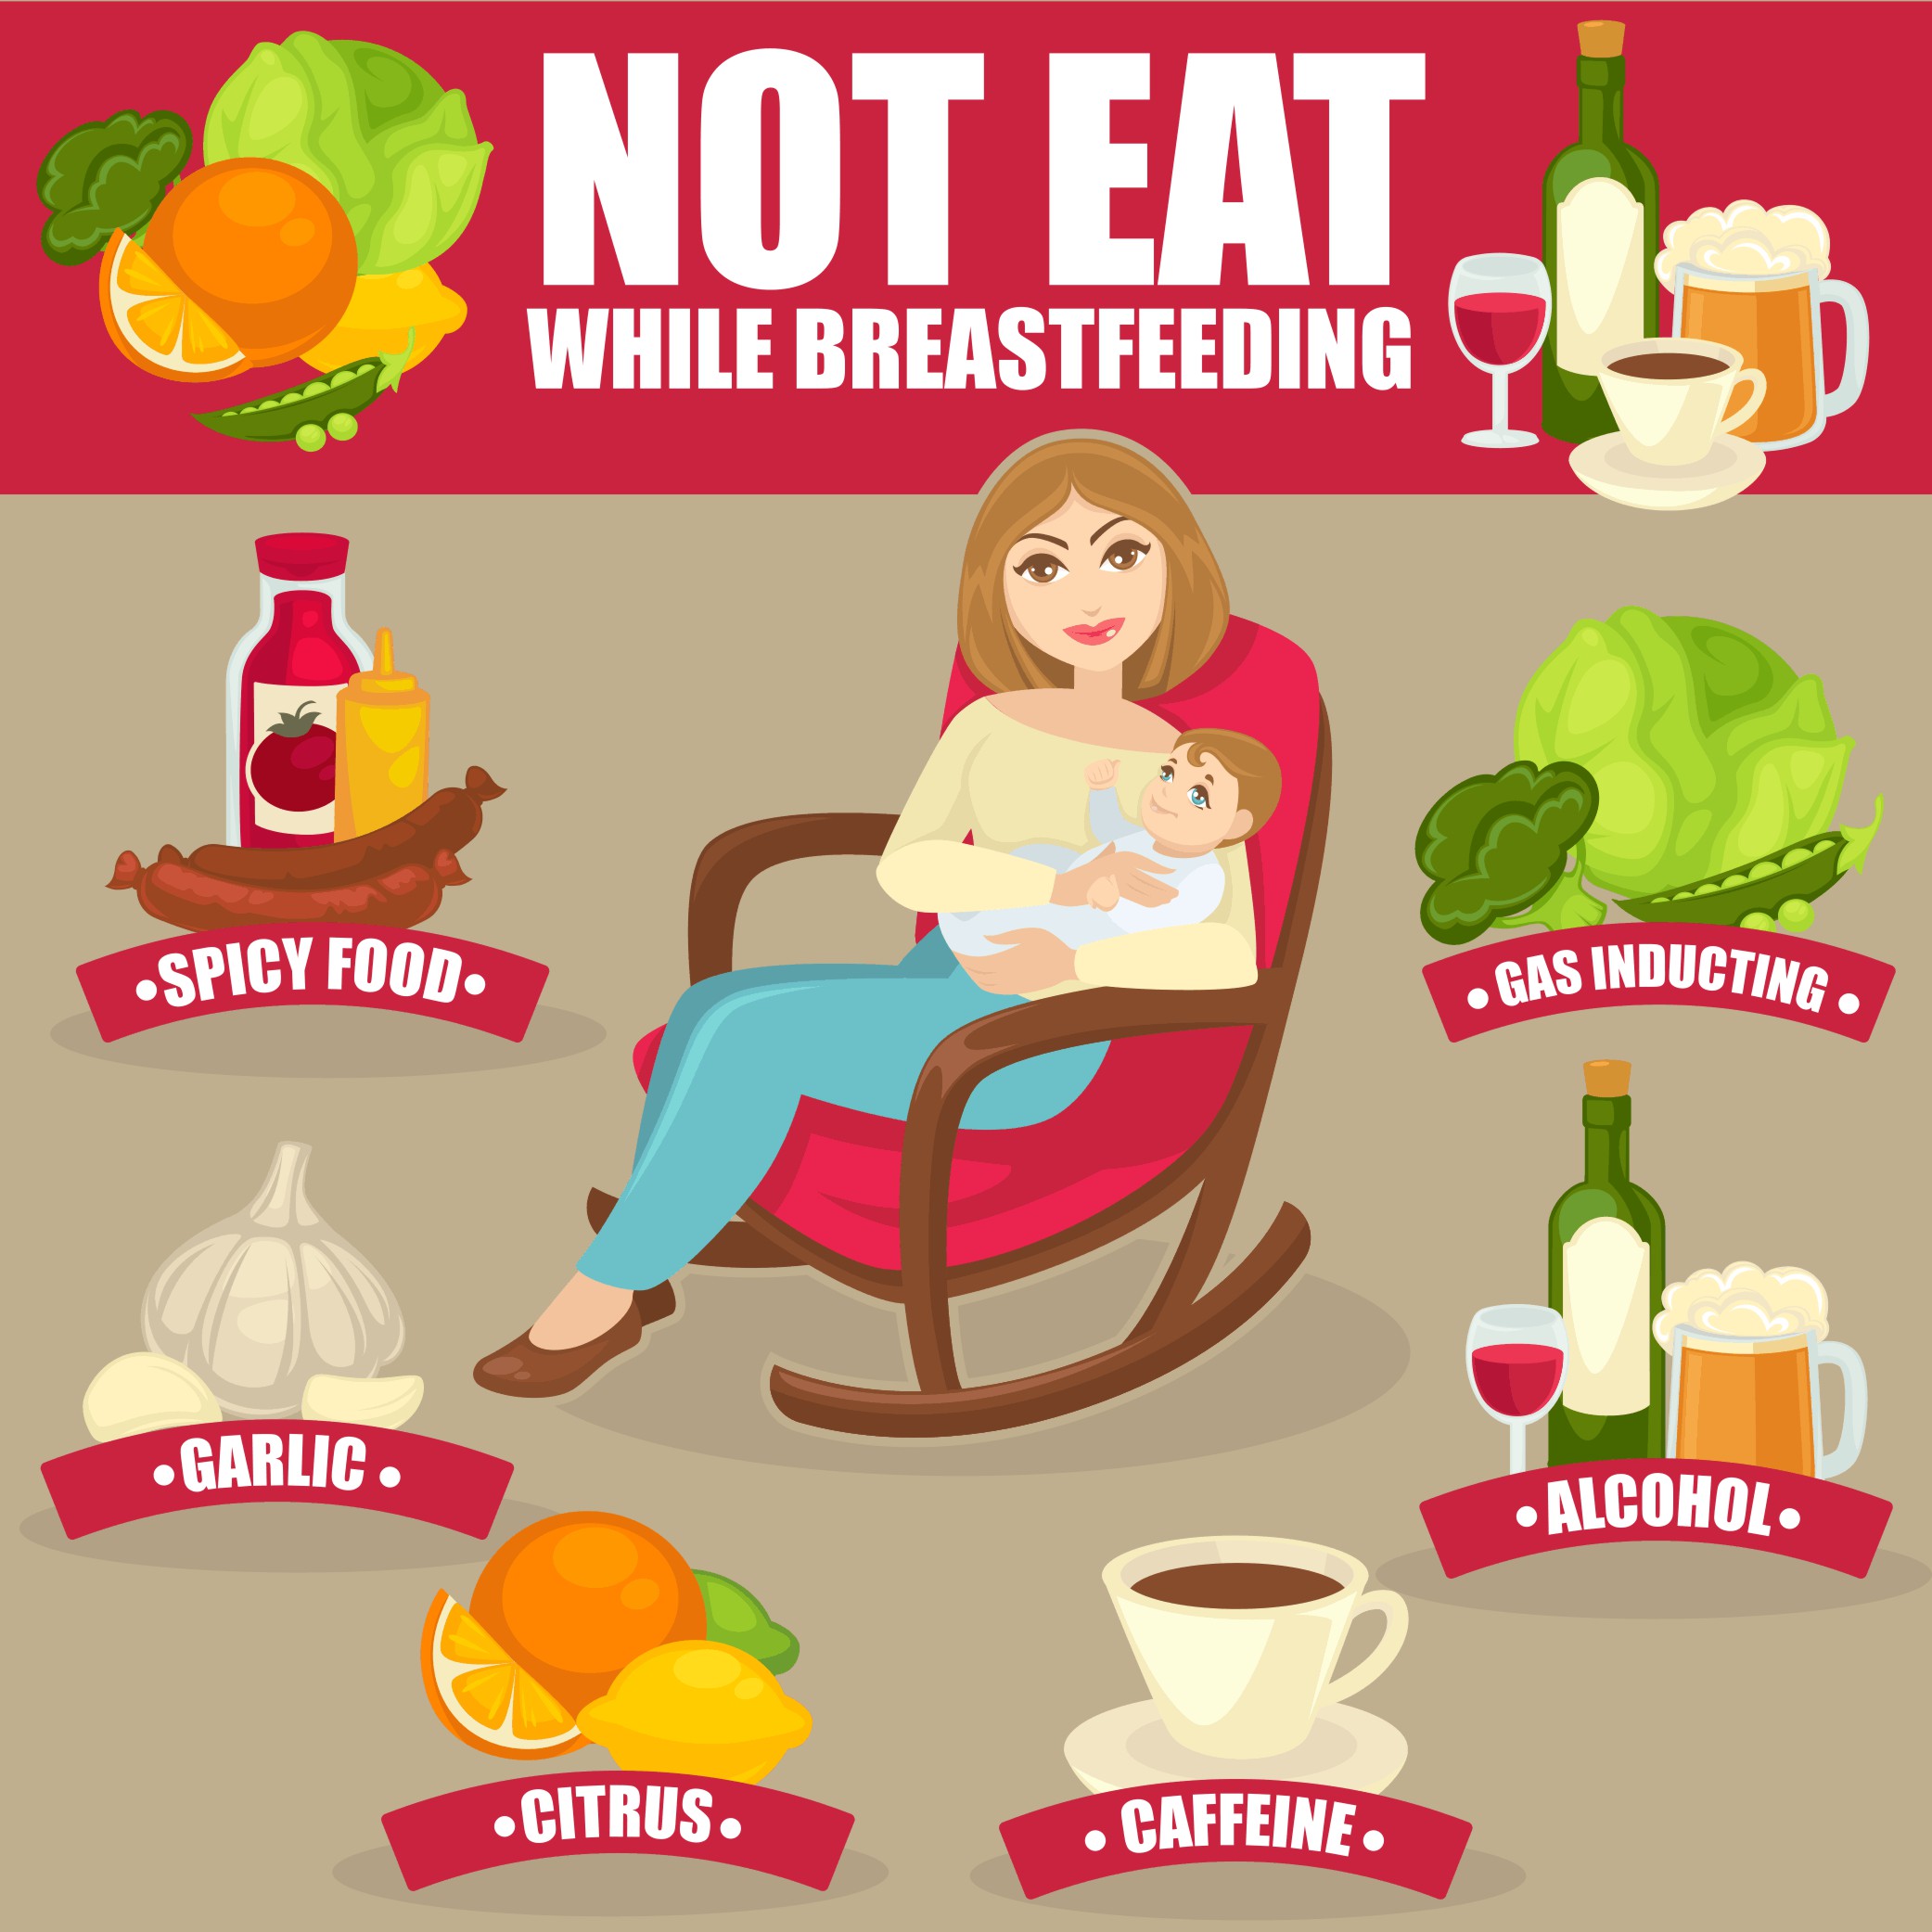 Healthy Foods During Breastfeeding | Health Food for Breastfeeding Mother